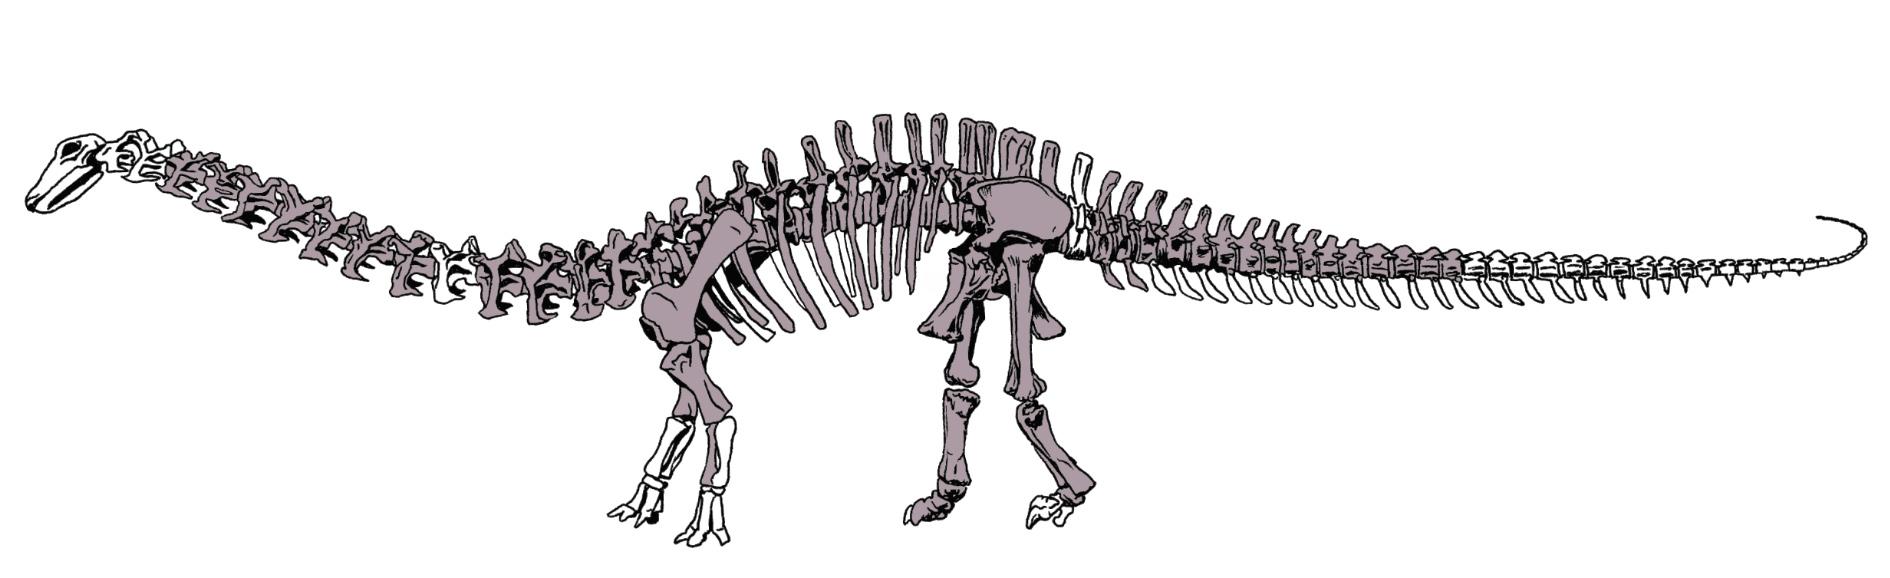 Brontosaurus graphic